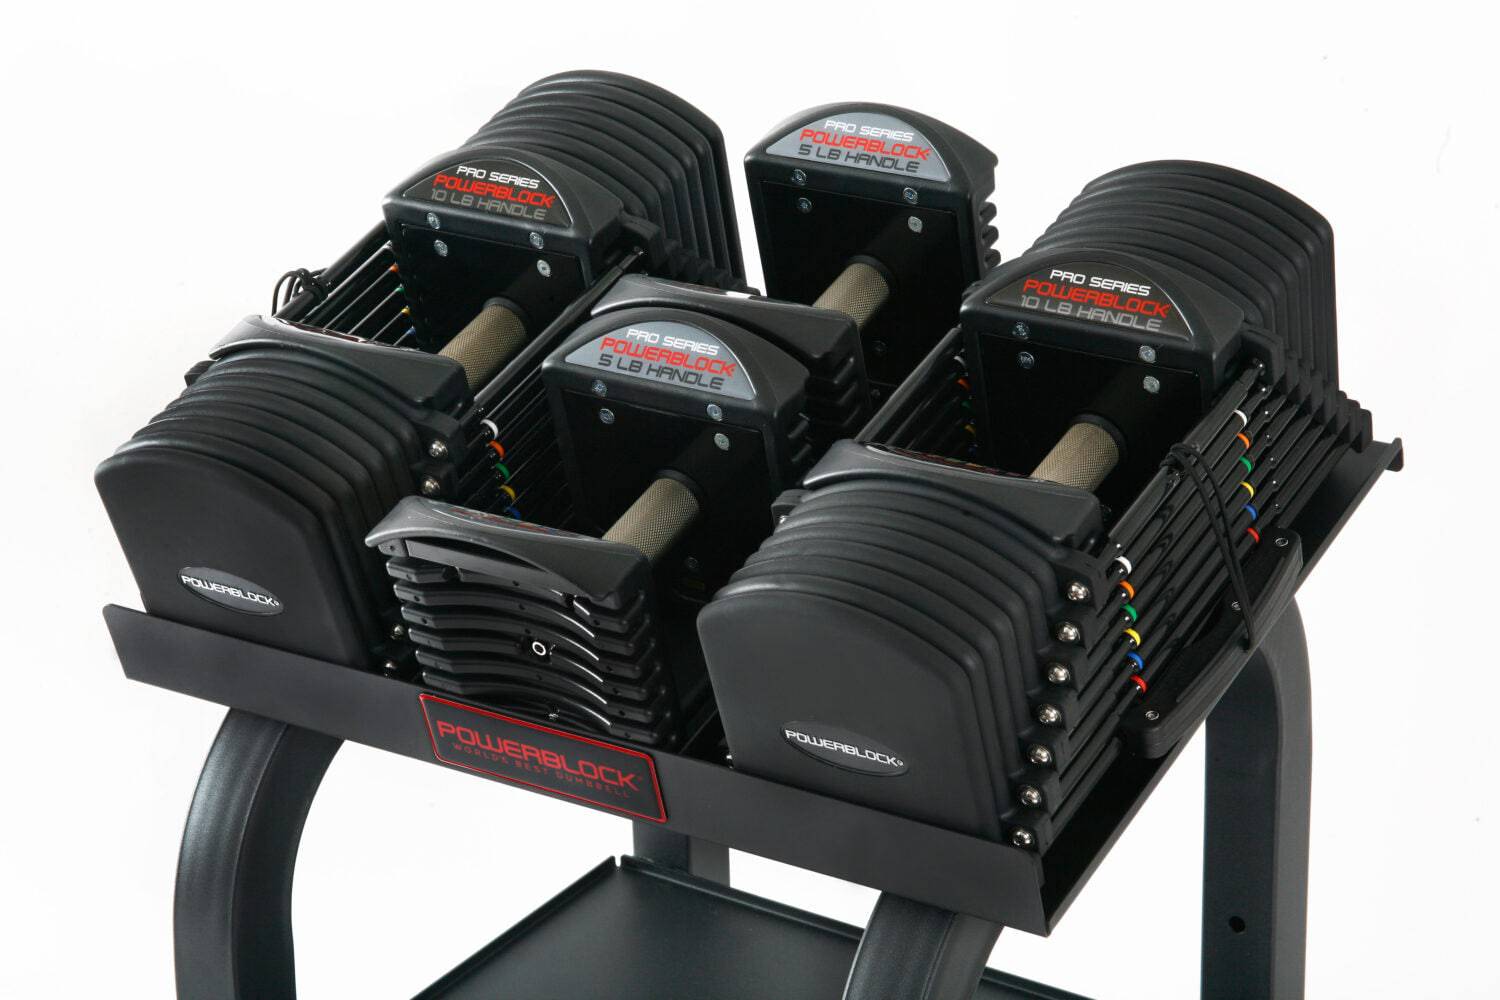 PowerBlock | Commercial Series Pro 90 Set - XTC Fitness - Exercise Equipment Superstore - Canada - Adjustable Dumbbells